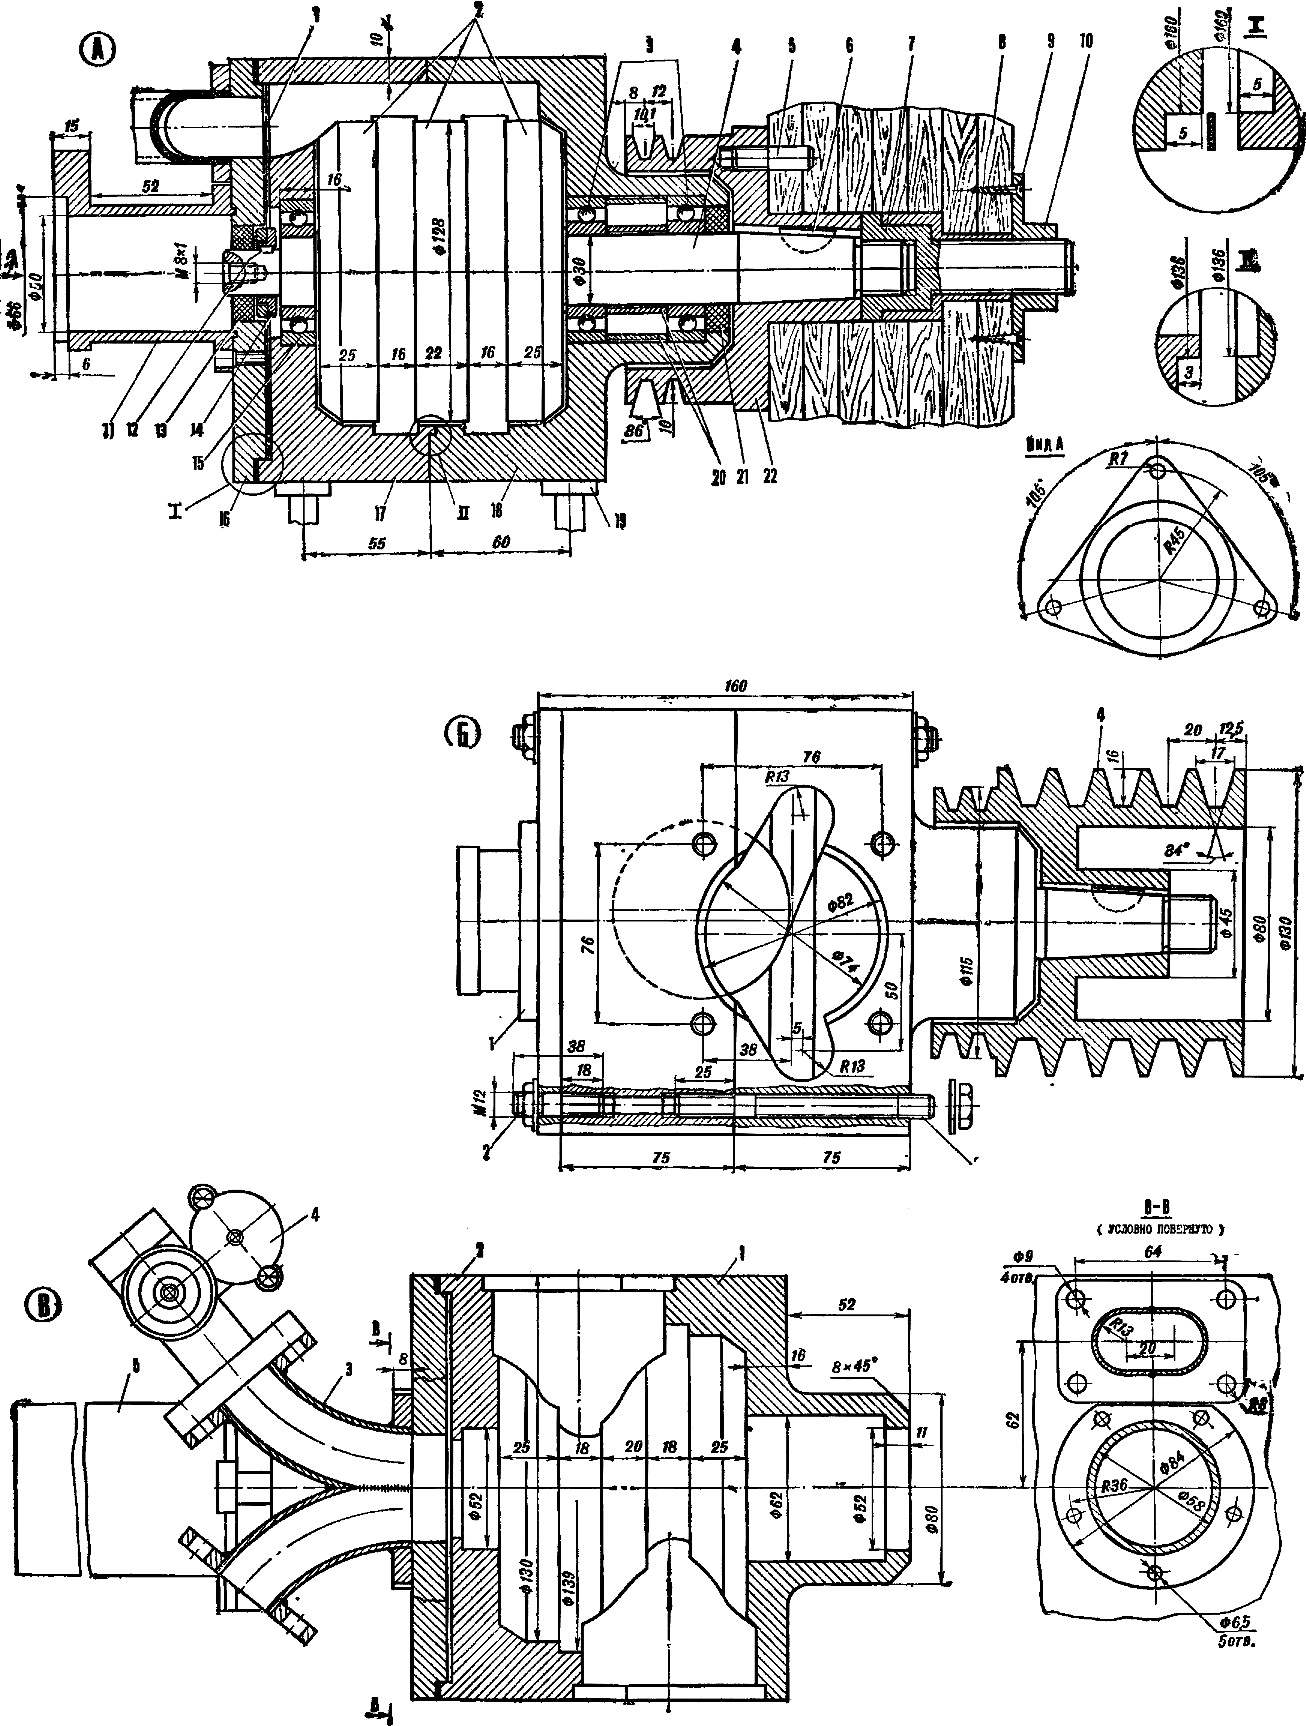 Fig. 3. Universal two cylinder flat twin engine KA-1 with spool distribution.